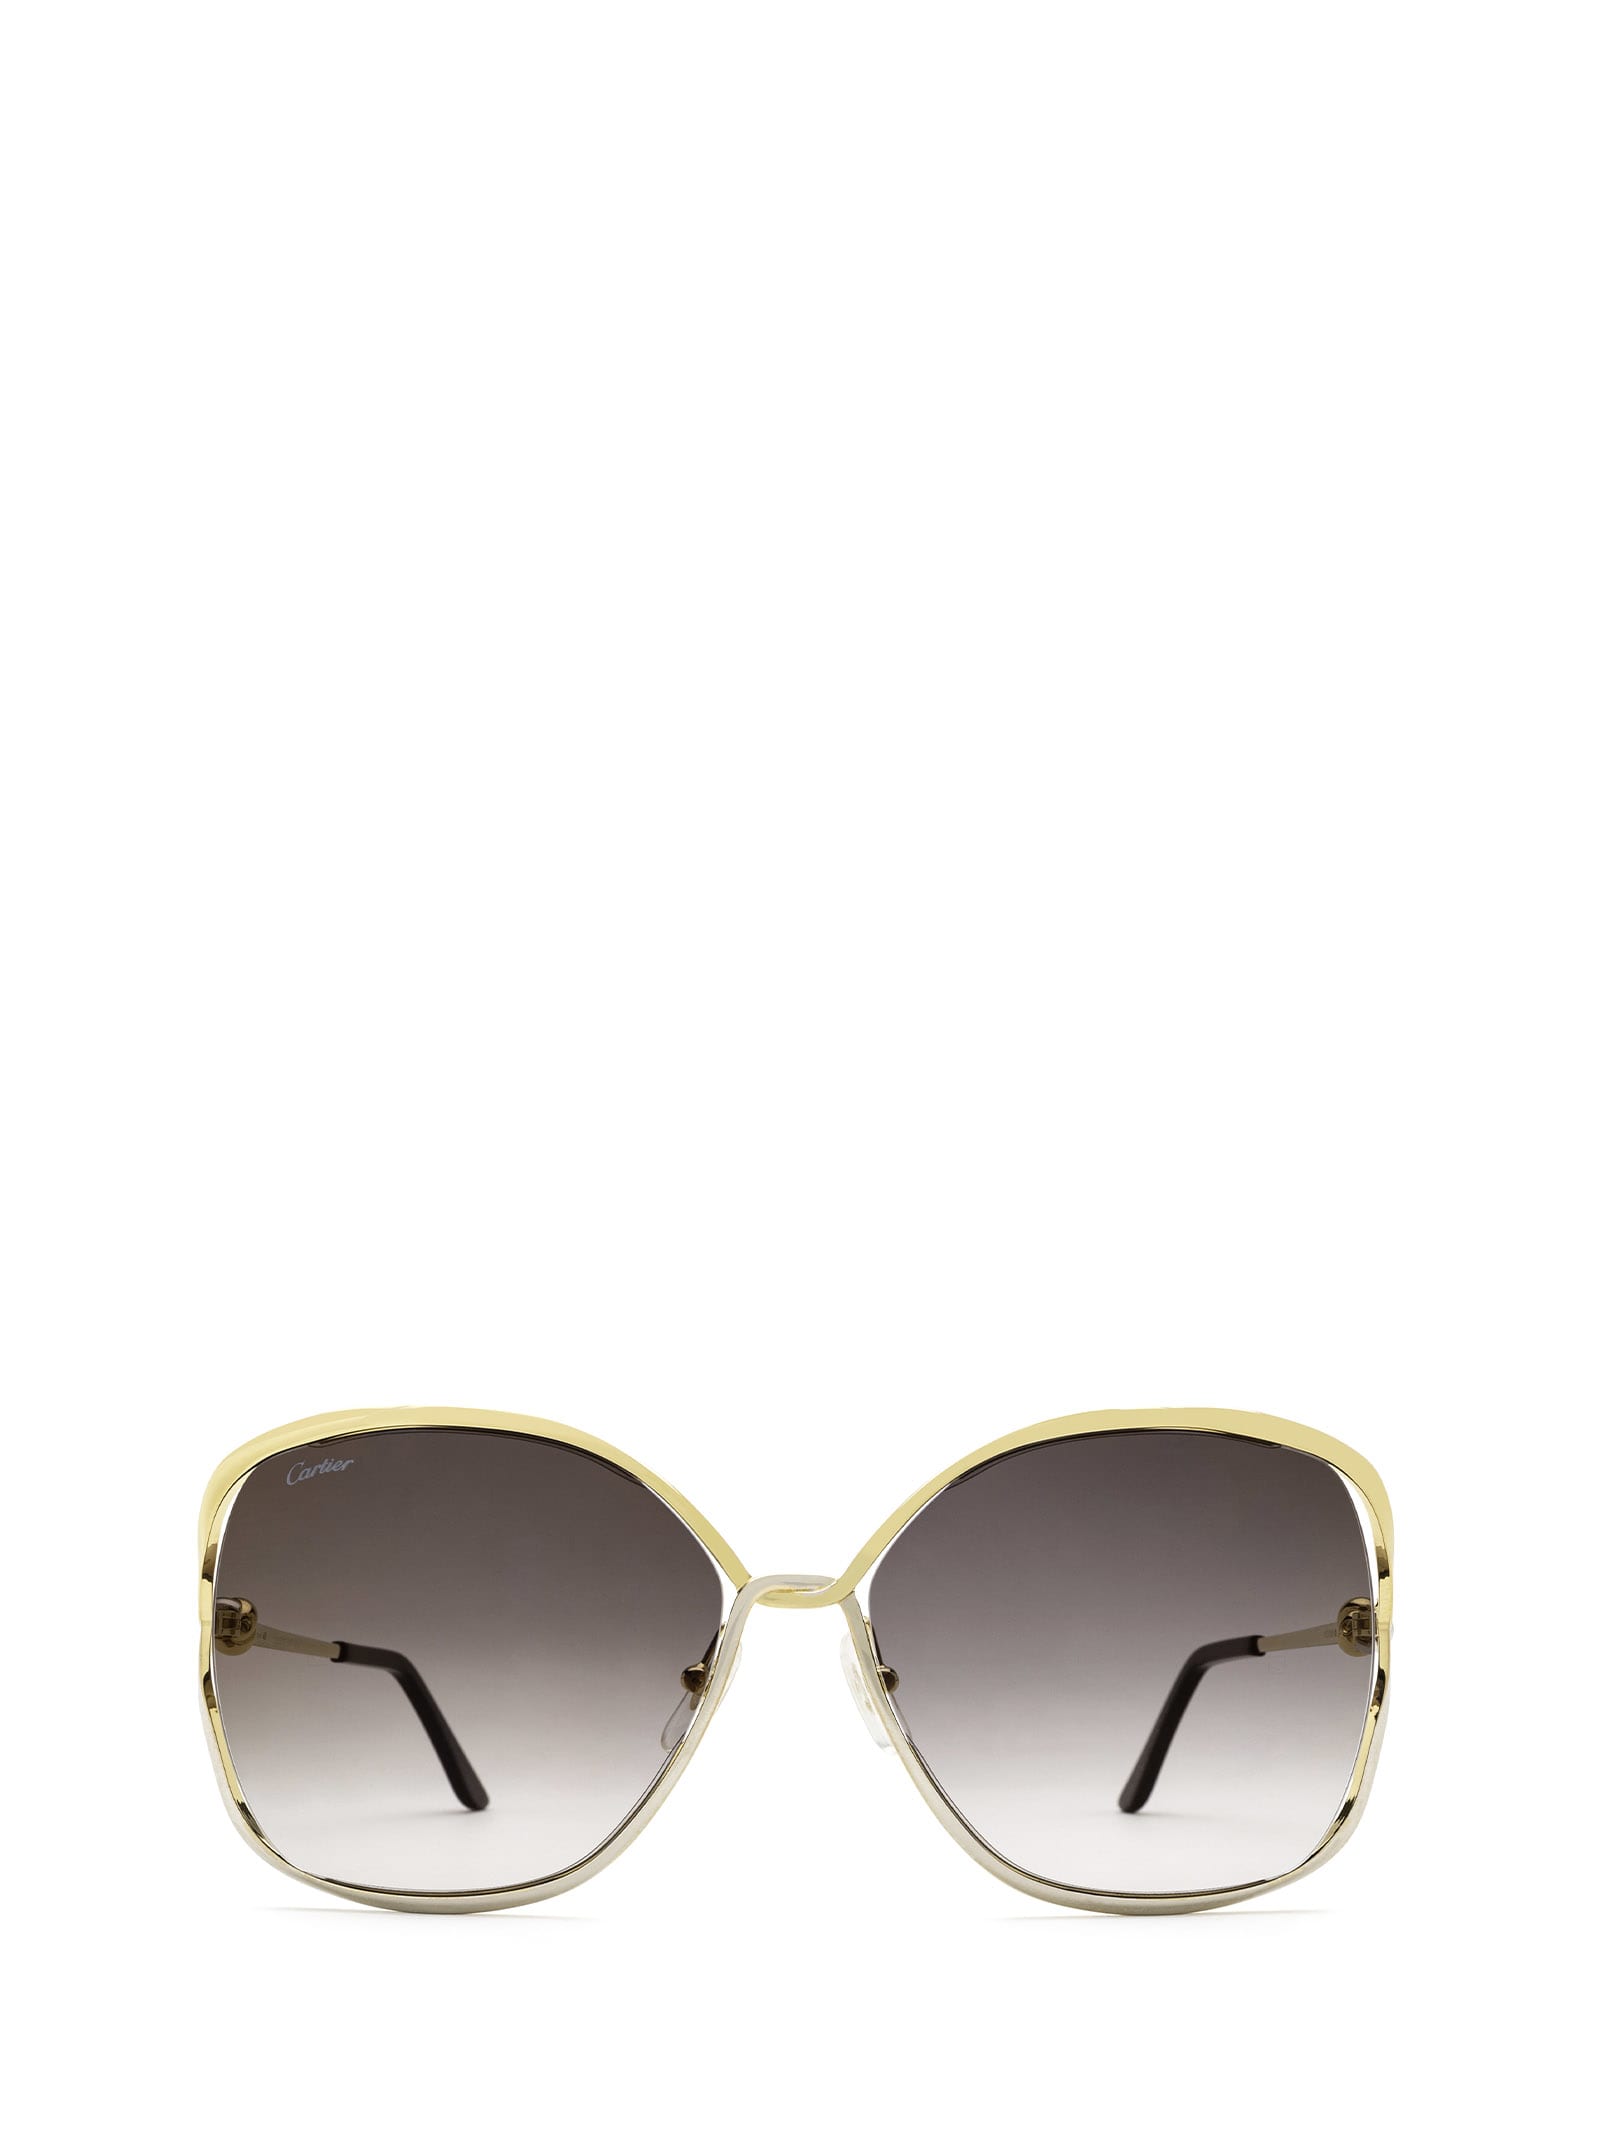 Cartier Ct0225s Gold Female Sunglasses | ModeSens